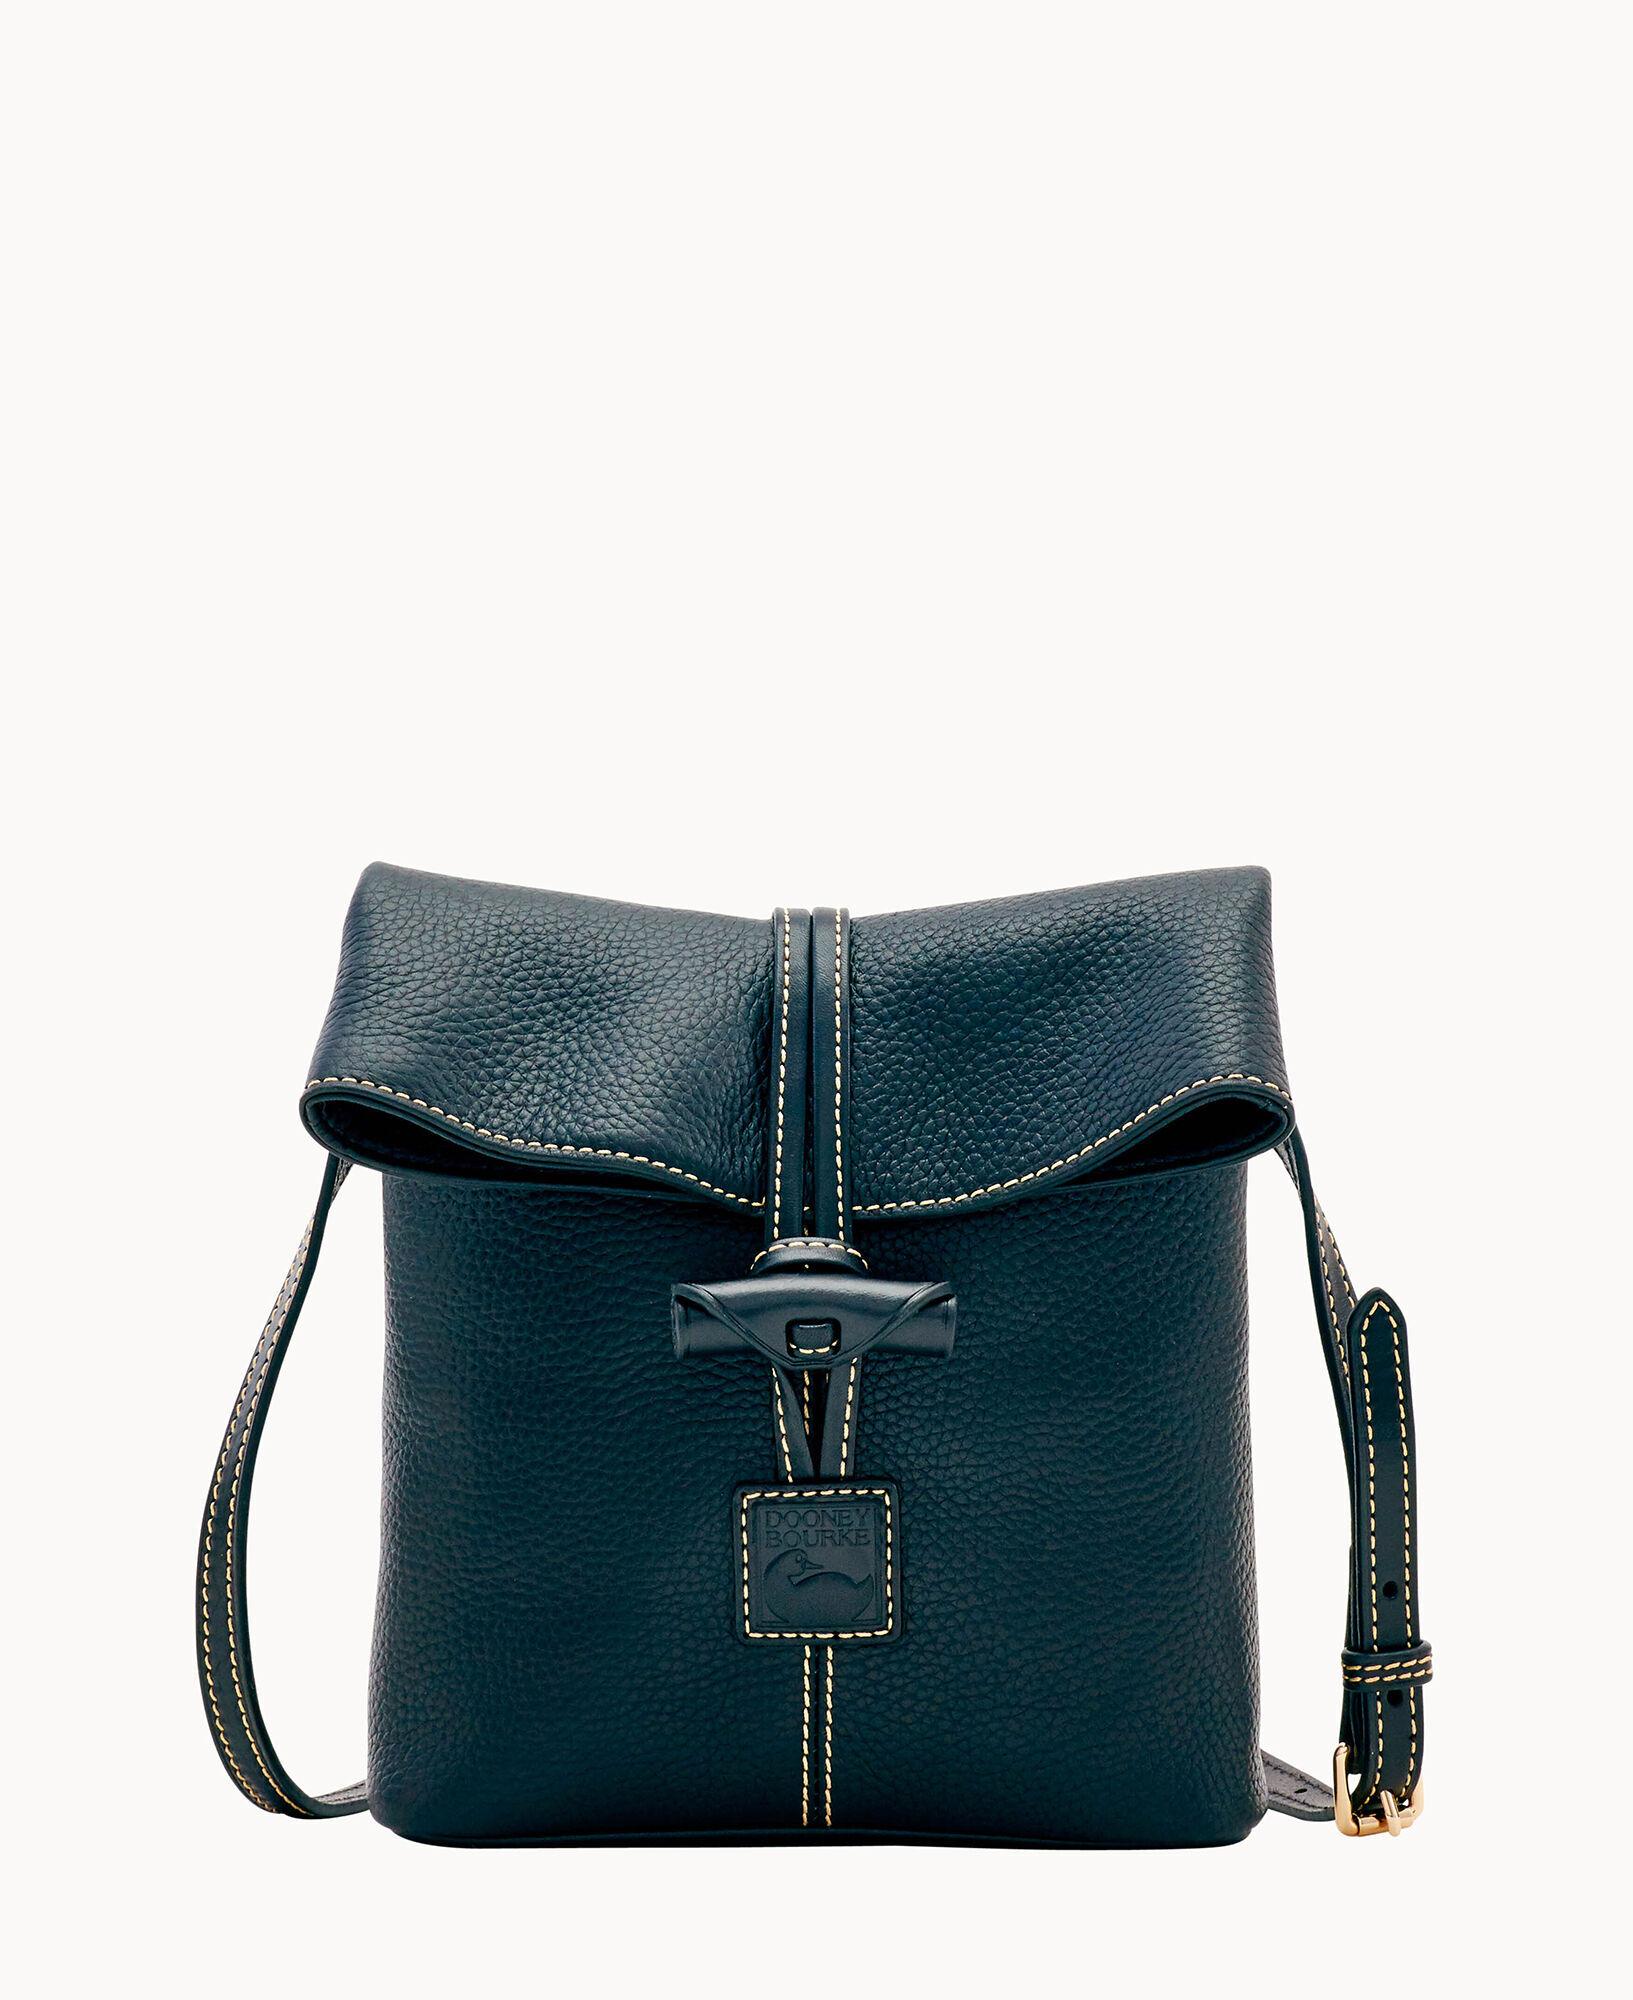 Dooney & Bourke Handbag, Pebble Grain Crossbody 25 - Black: Handbags